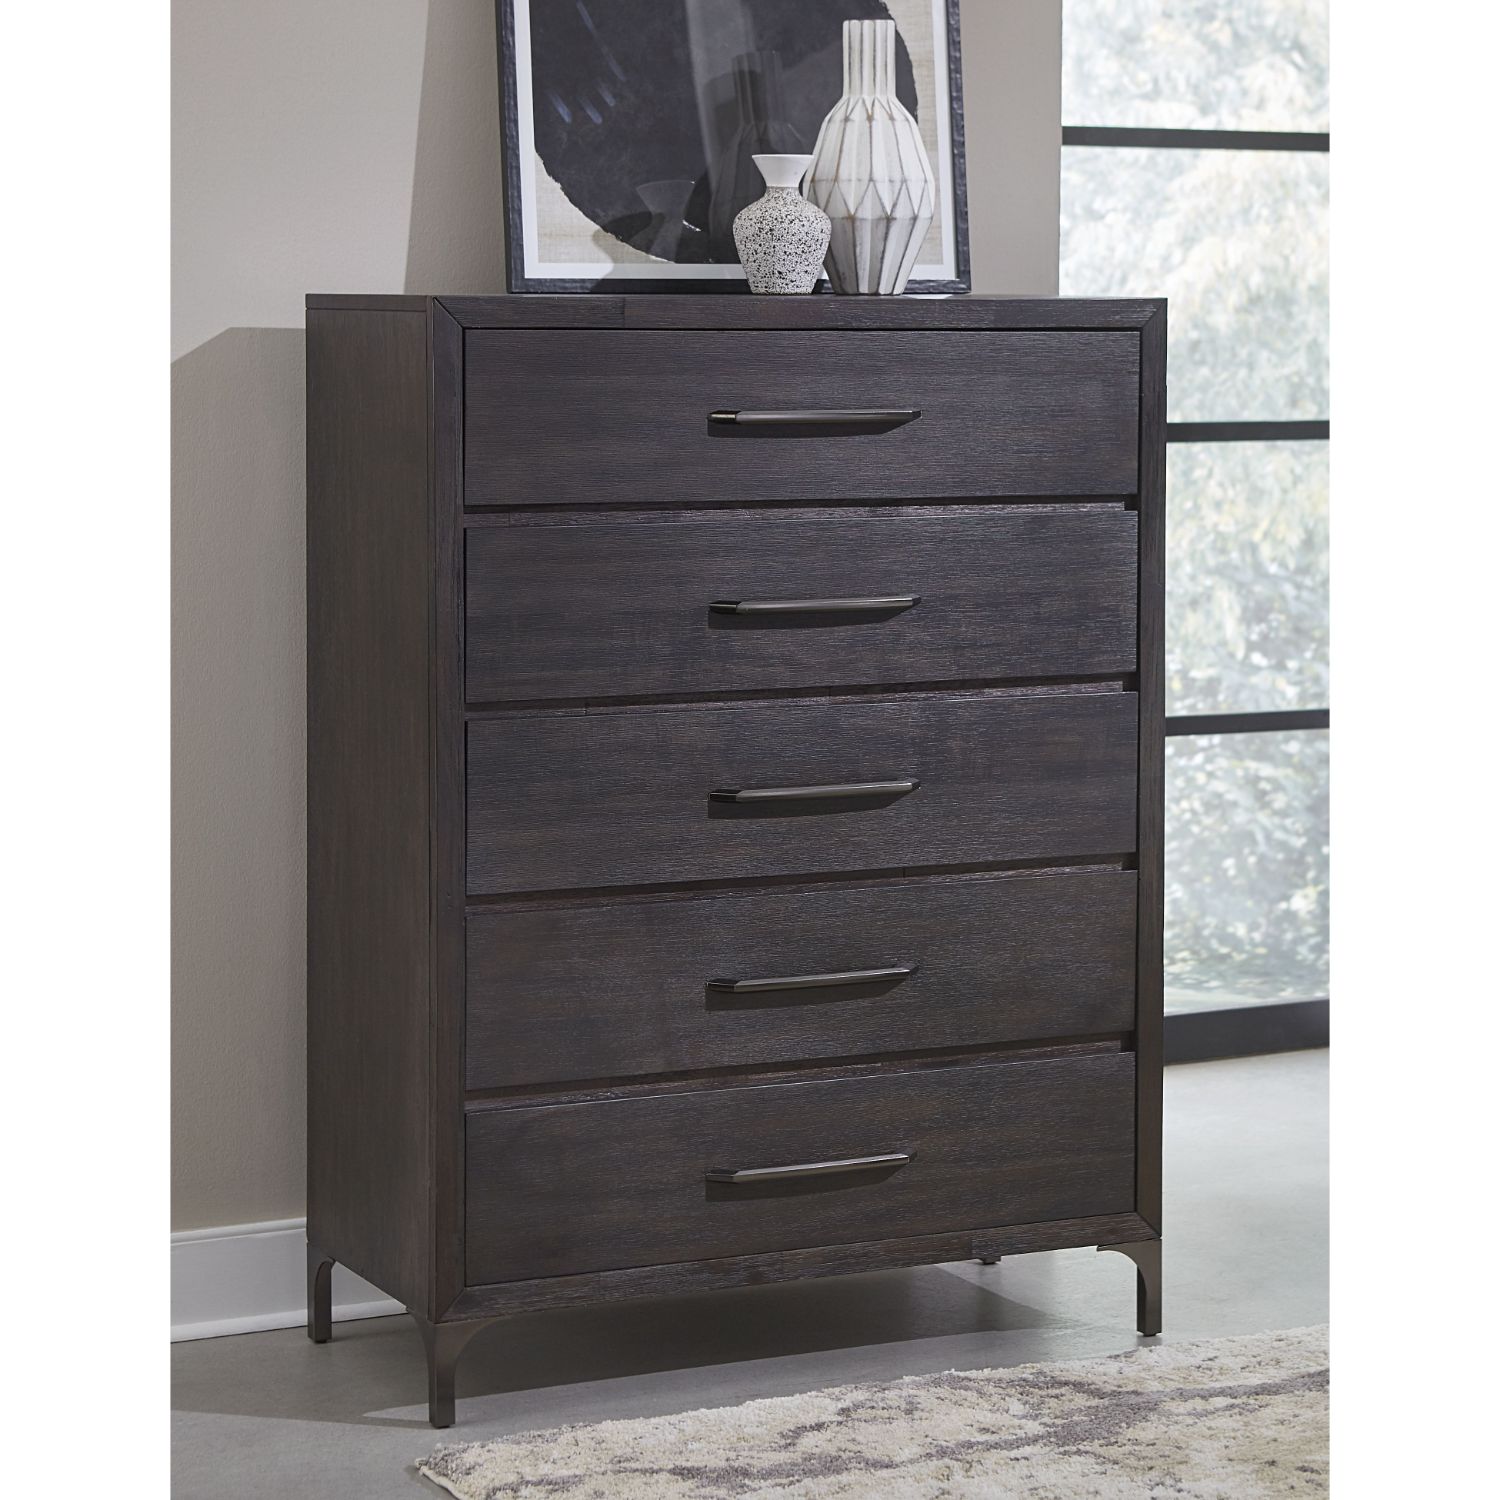 Modus Hearst 9 Drawer Solid Wood Dresser in Sahara Tan - image 5 of 5